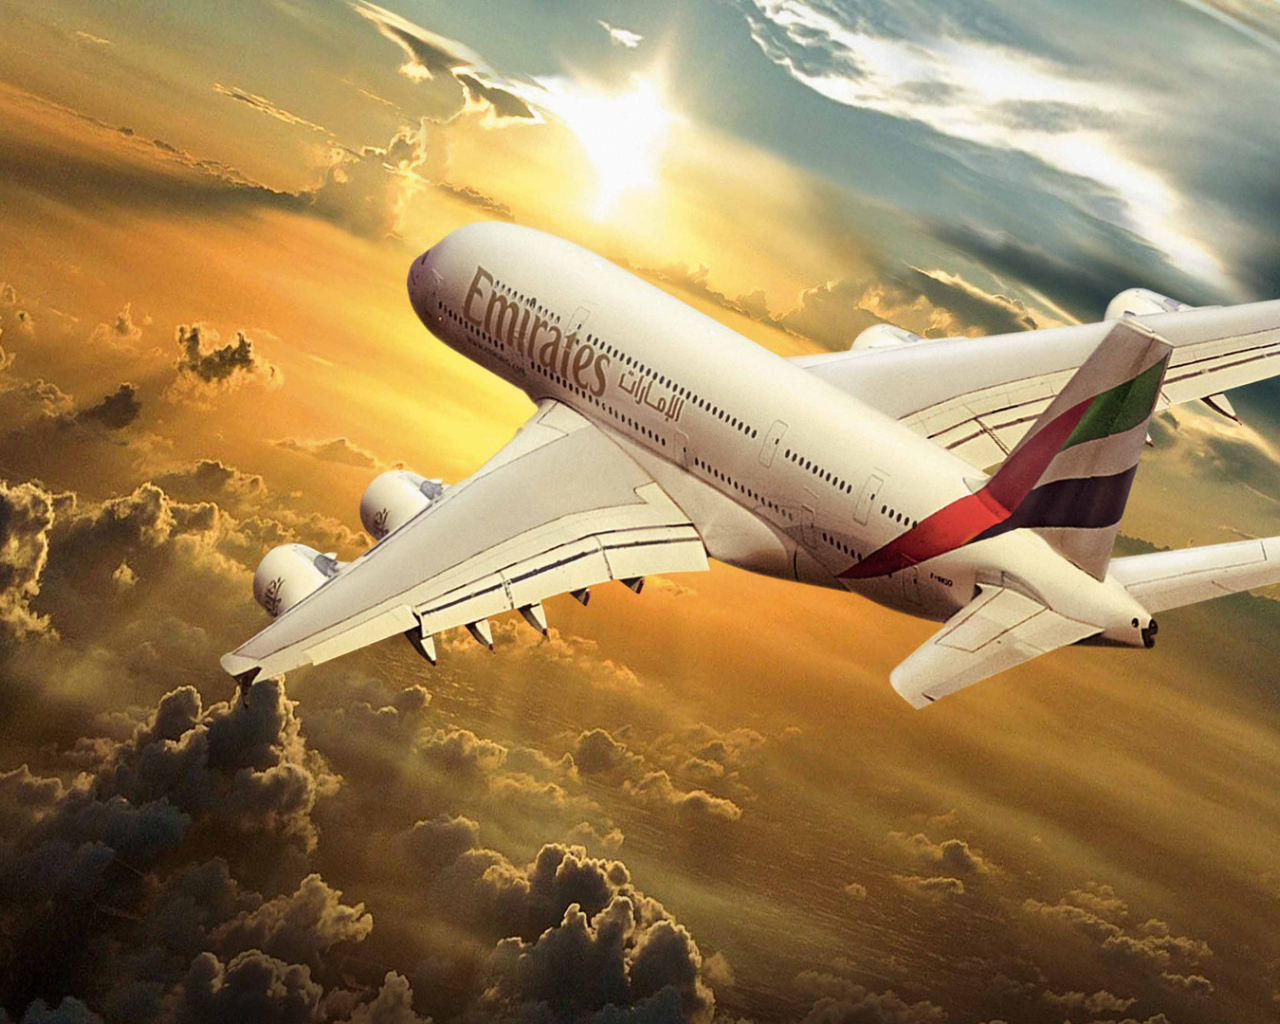 Airbus авиакомпании Emirates в лучах солнца